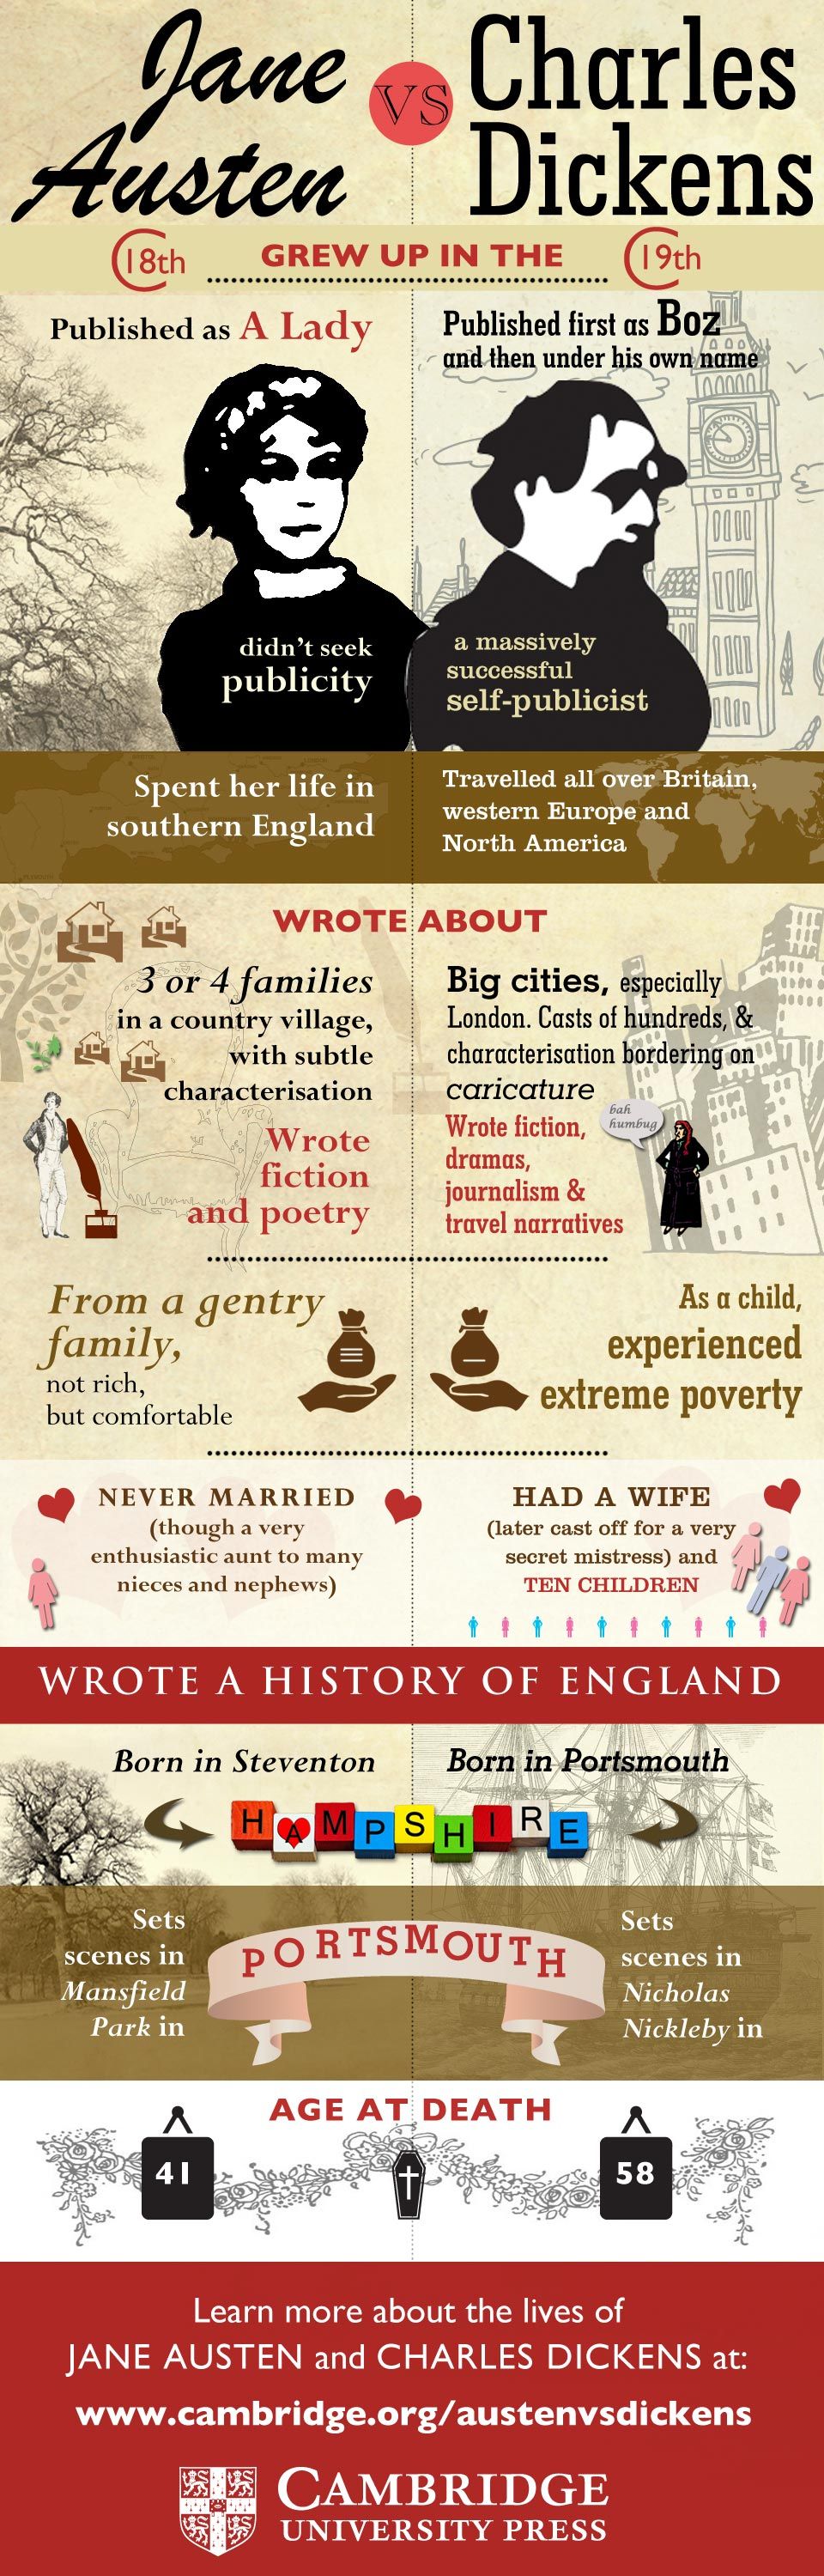 Jane Austen vs Charles Dickens infographic